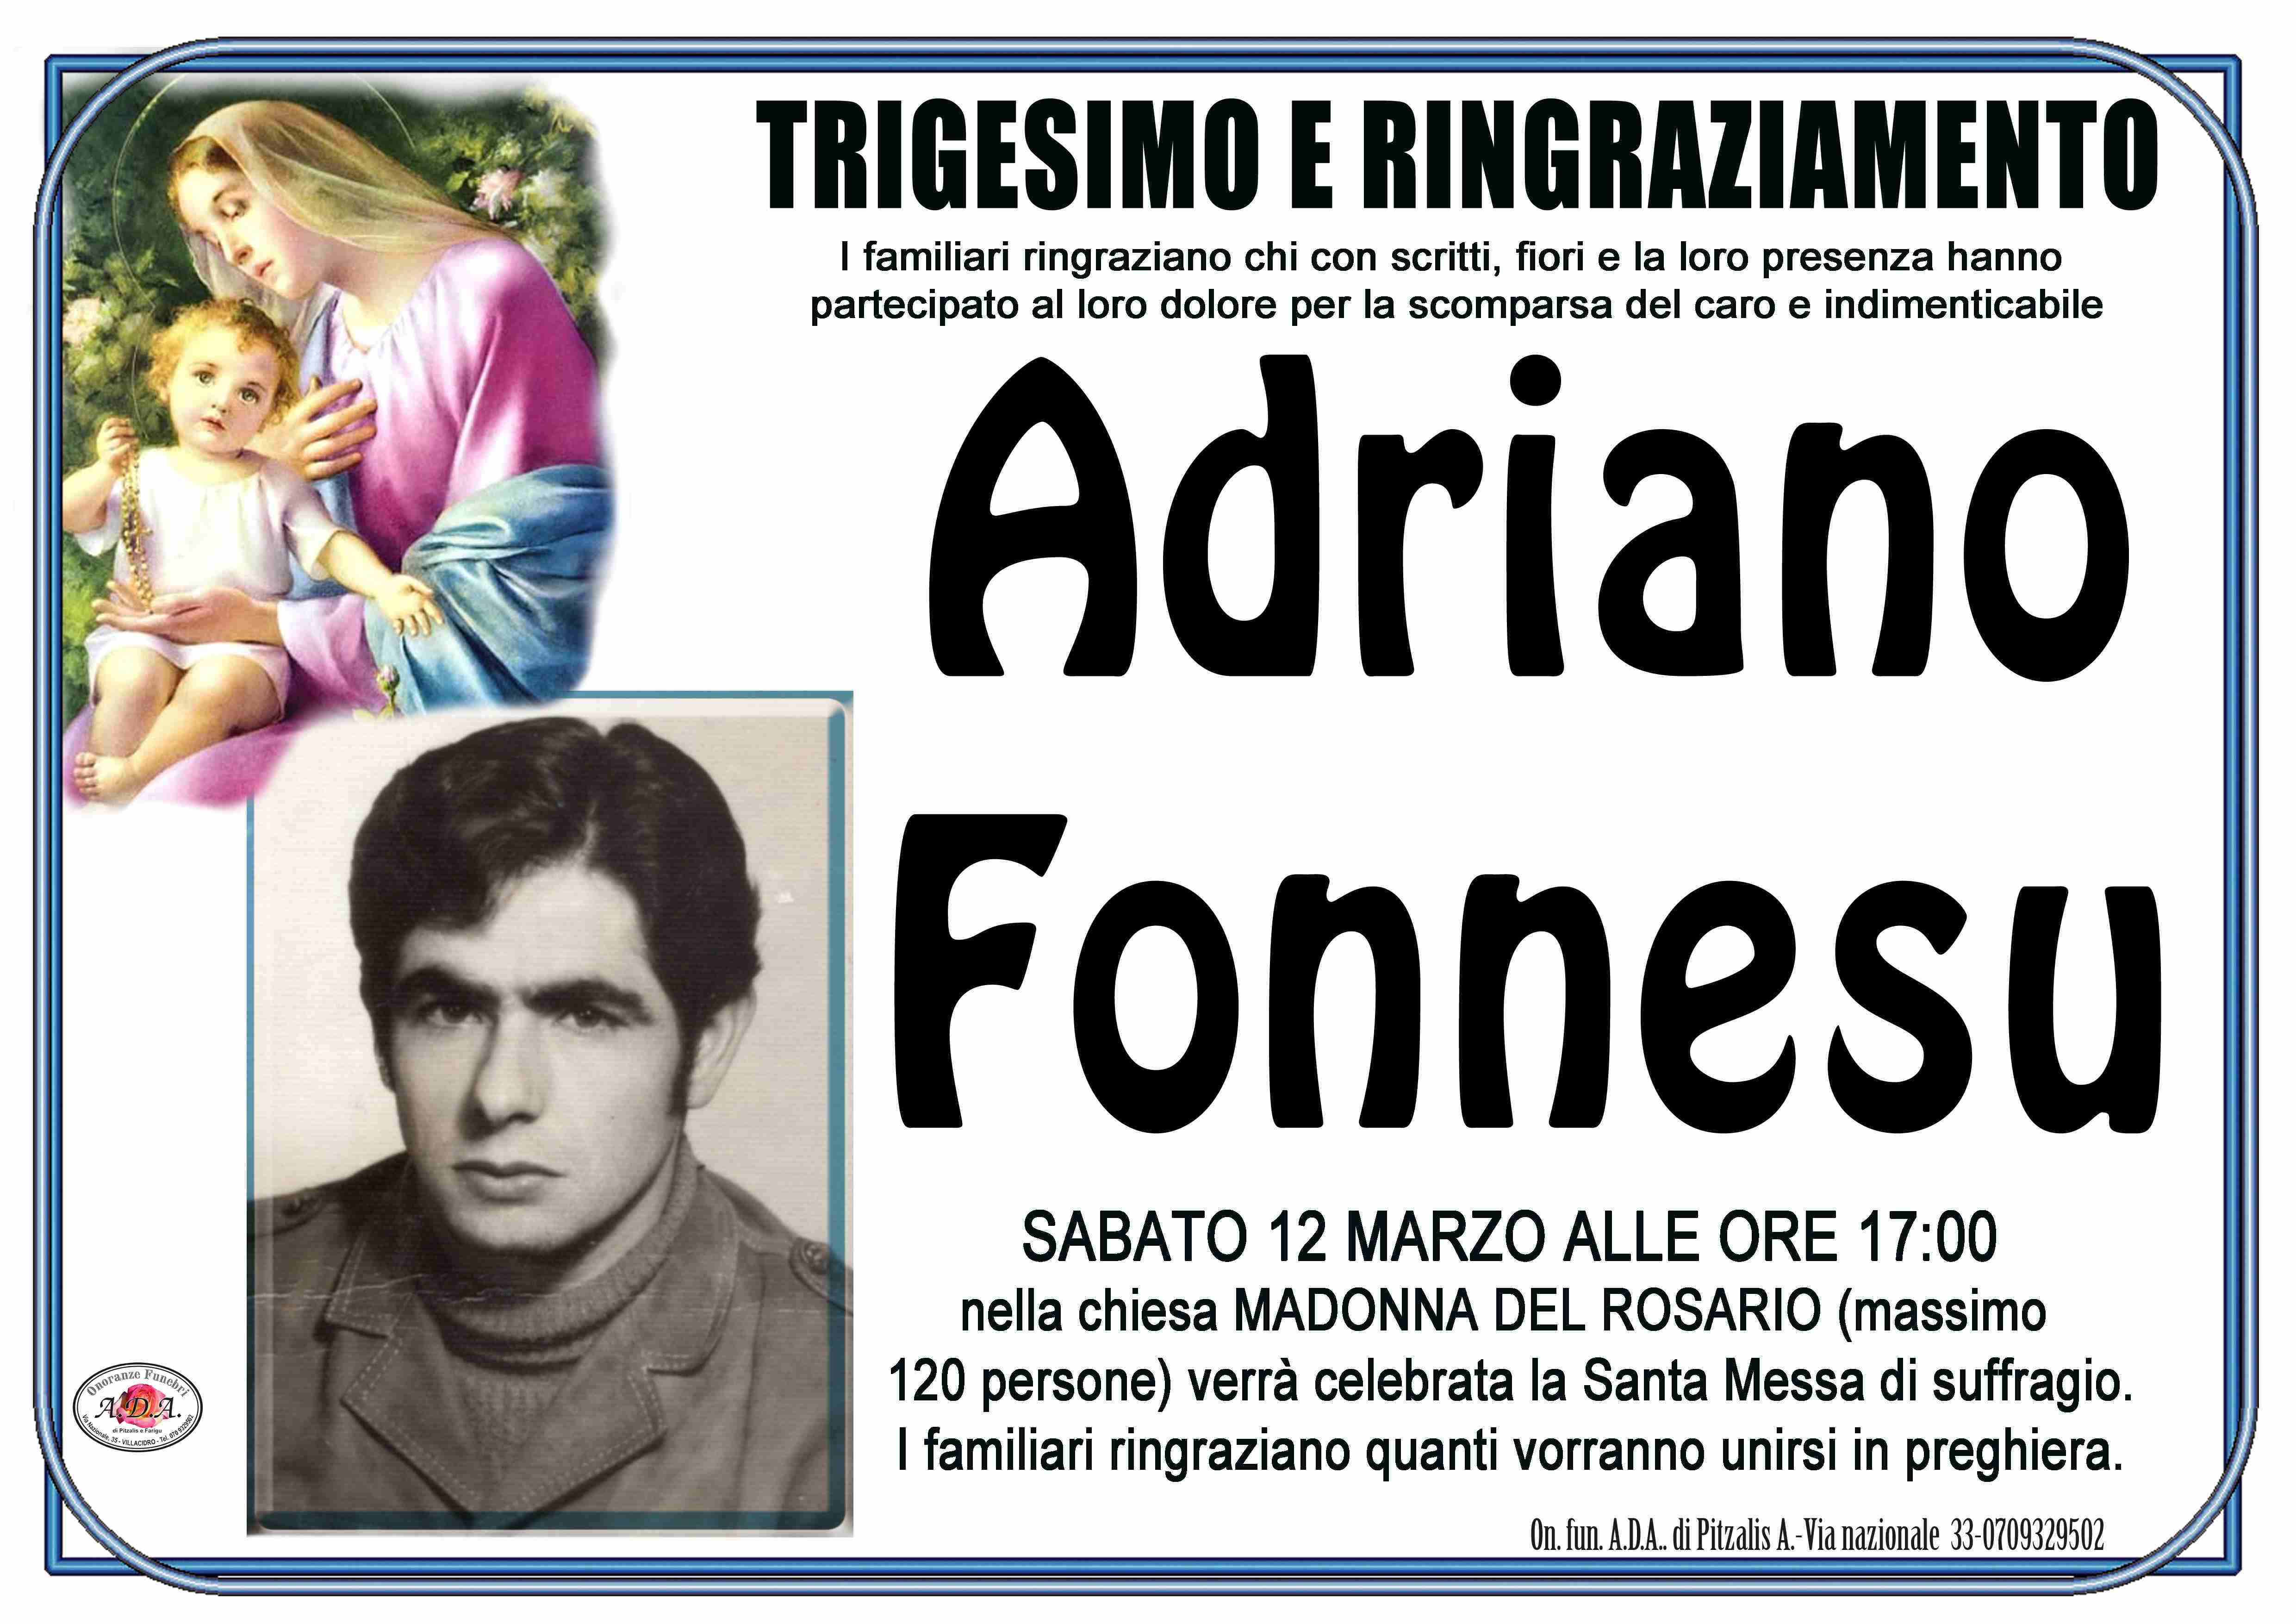 Adriano Fonnesu